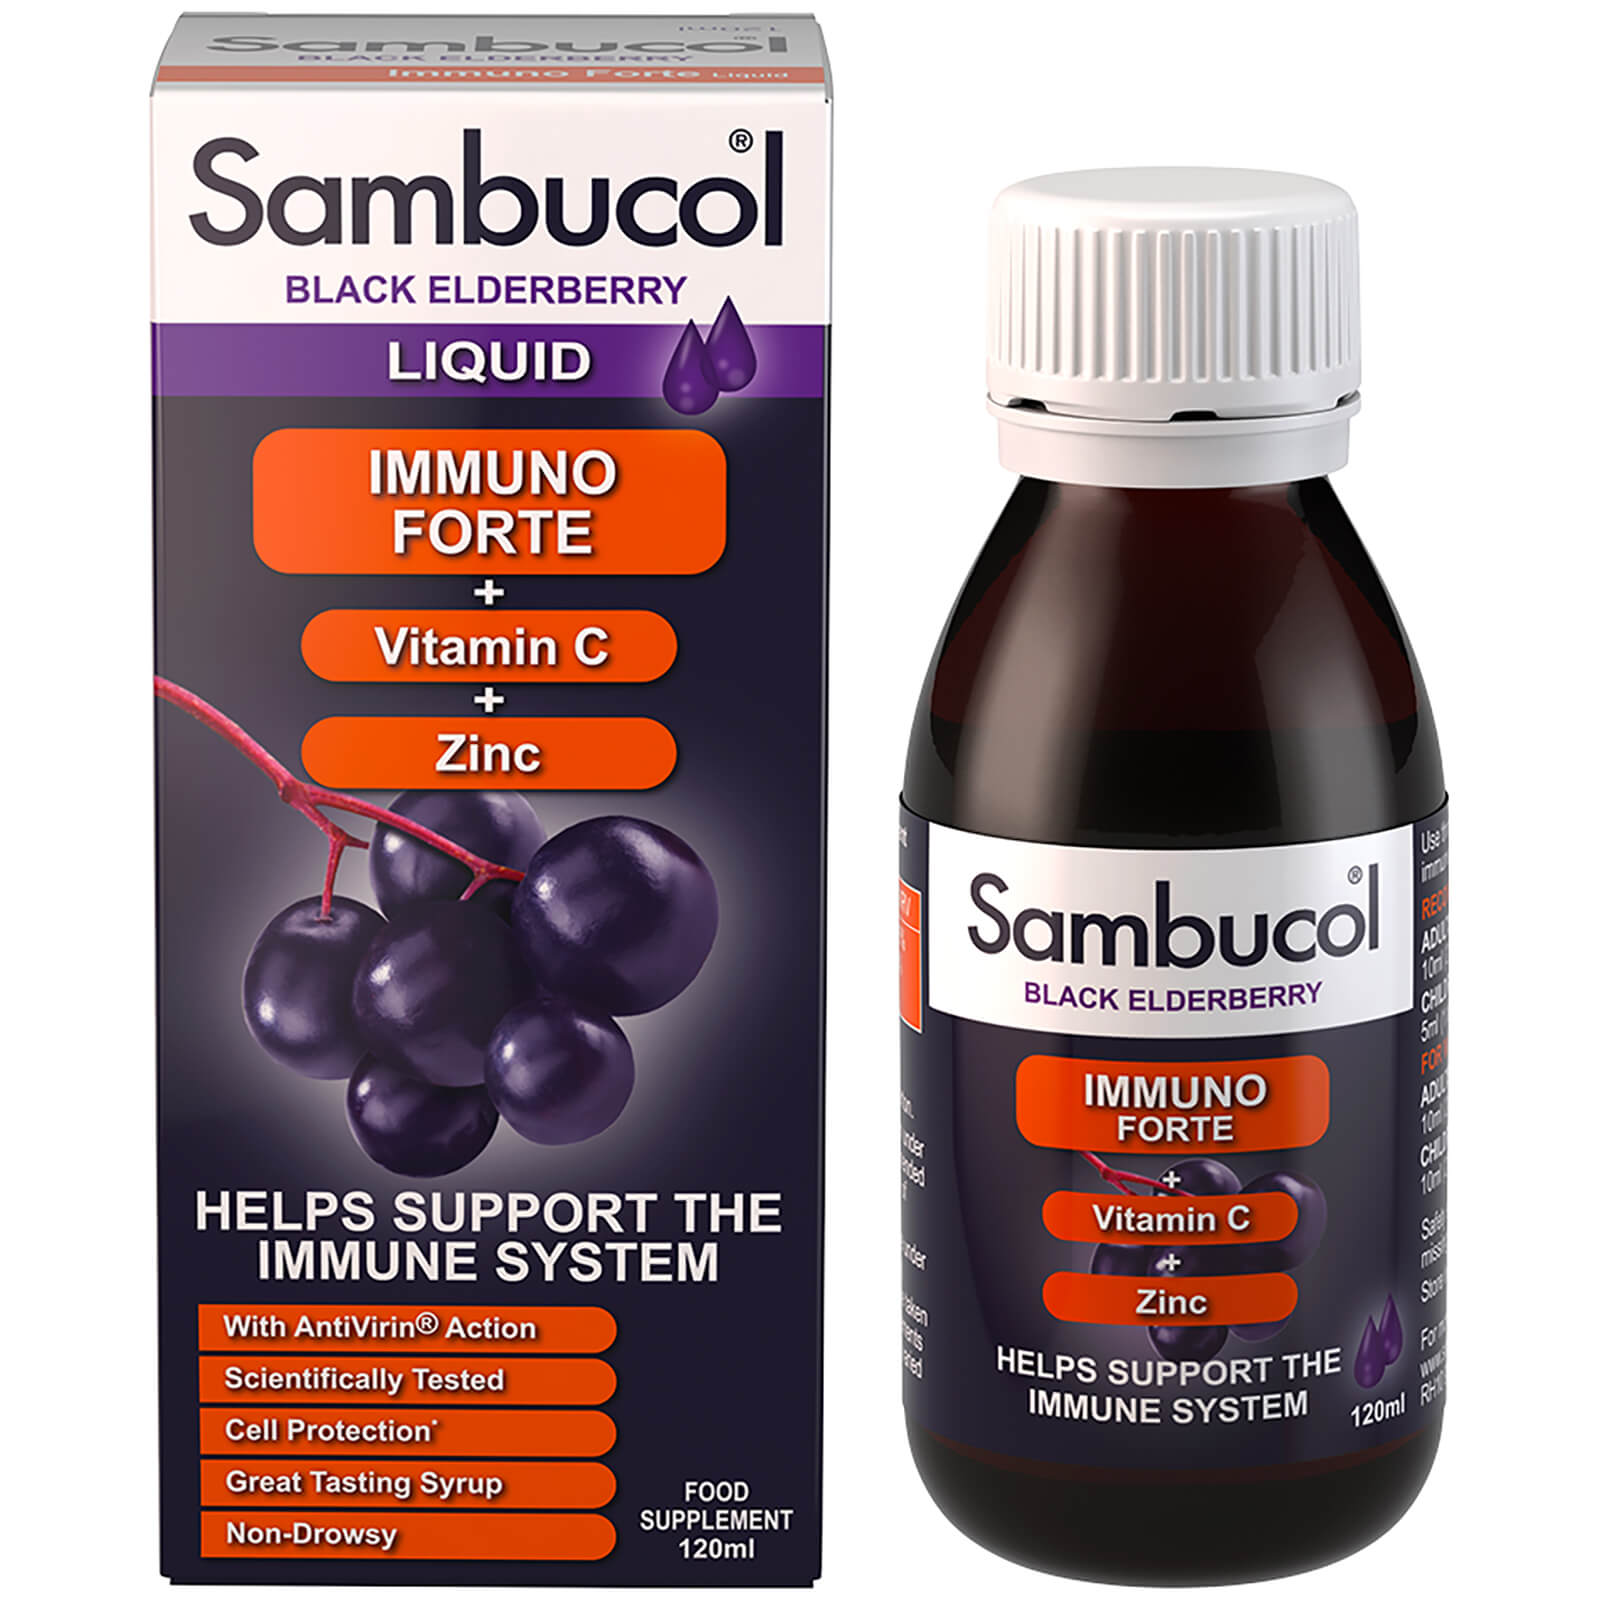 Sambucol Immuno Forte (120ml) lookfantastic.com imagine